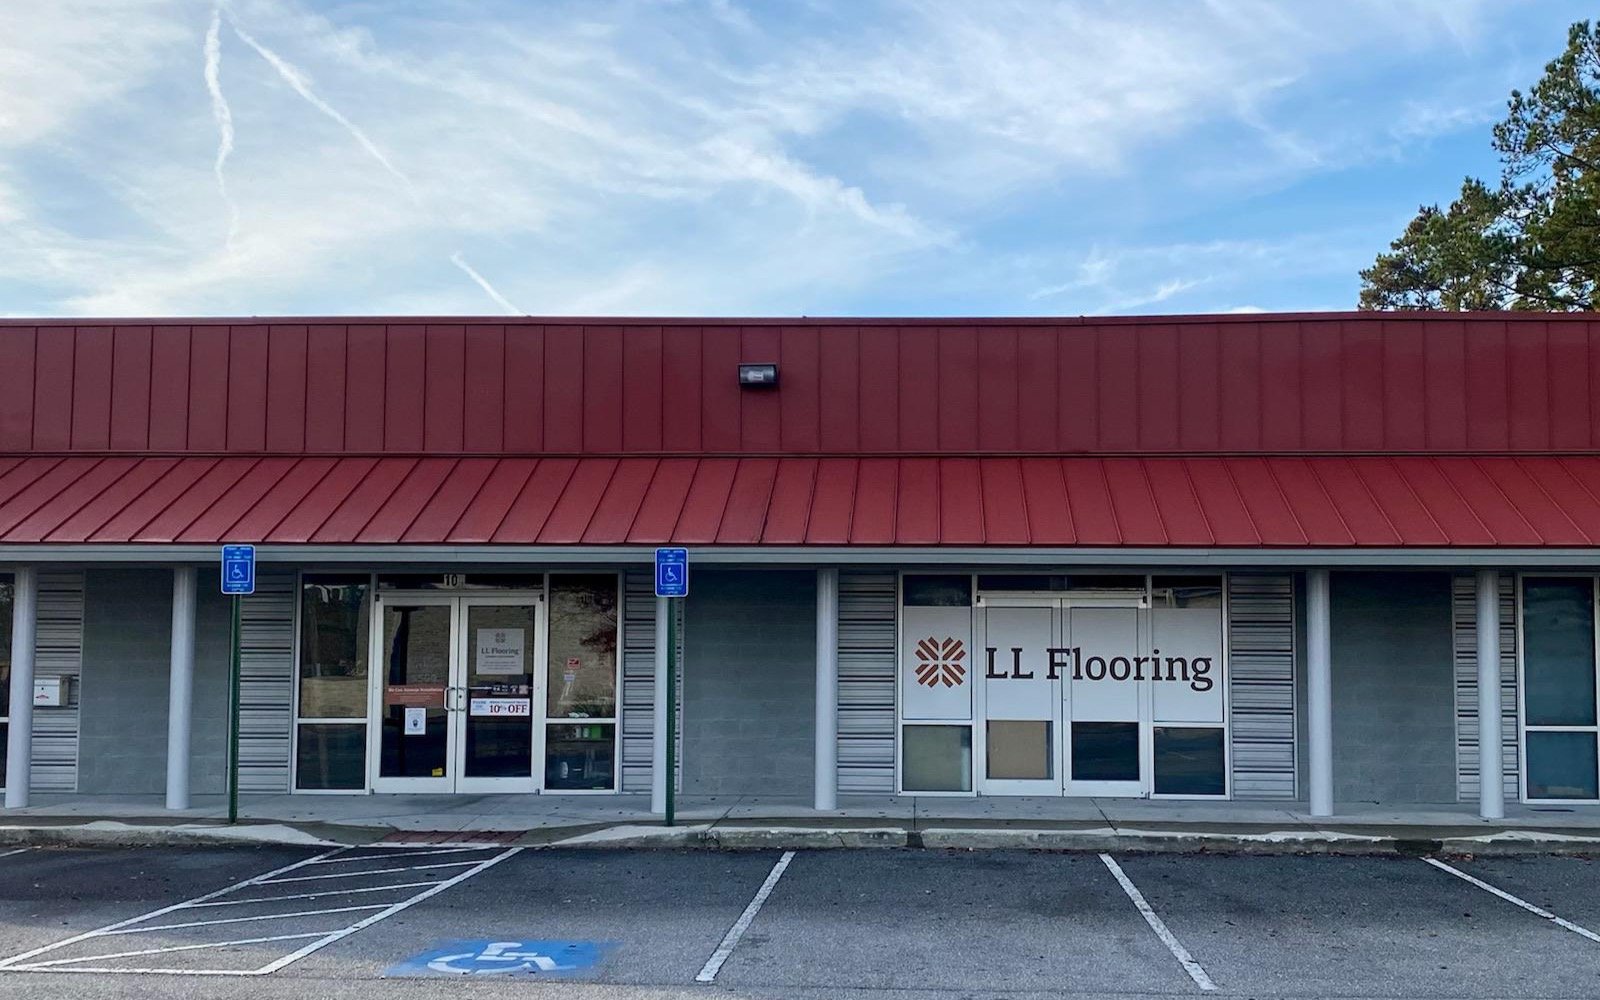 LL Flooring #1155 Savannah | 4131 Ogeechee Road | Storefront